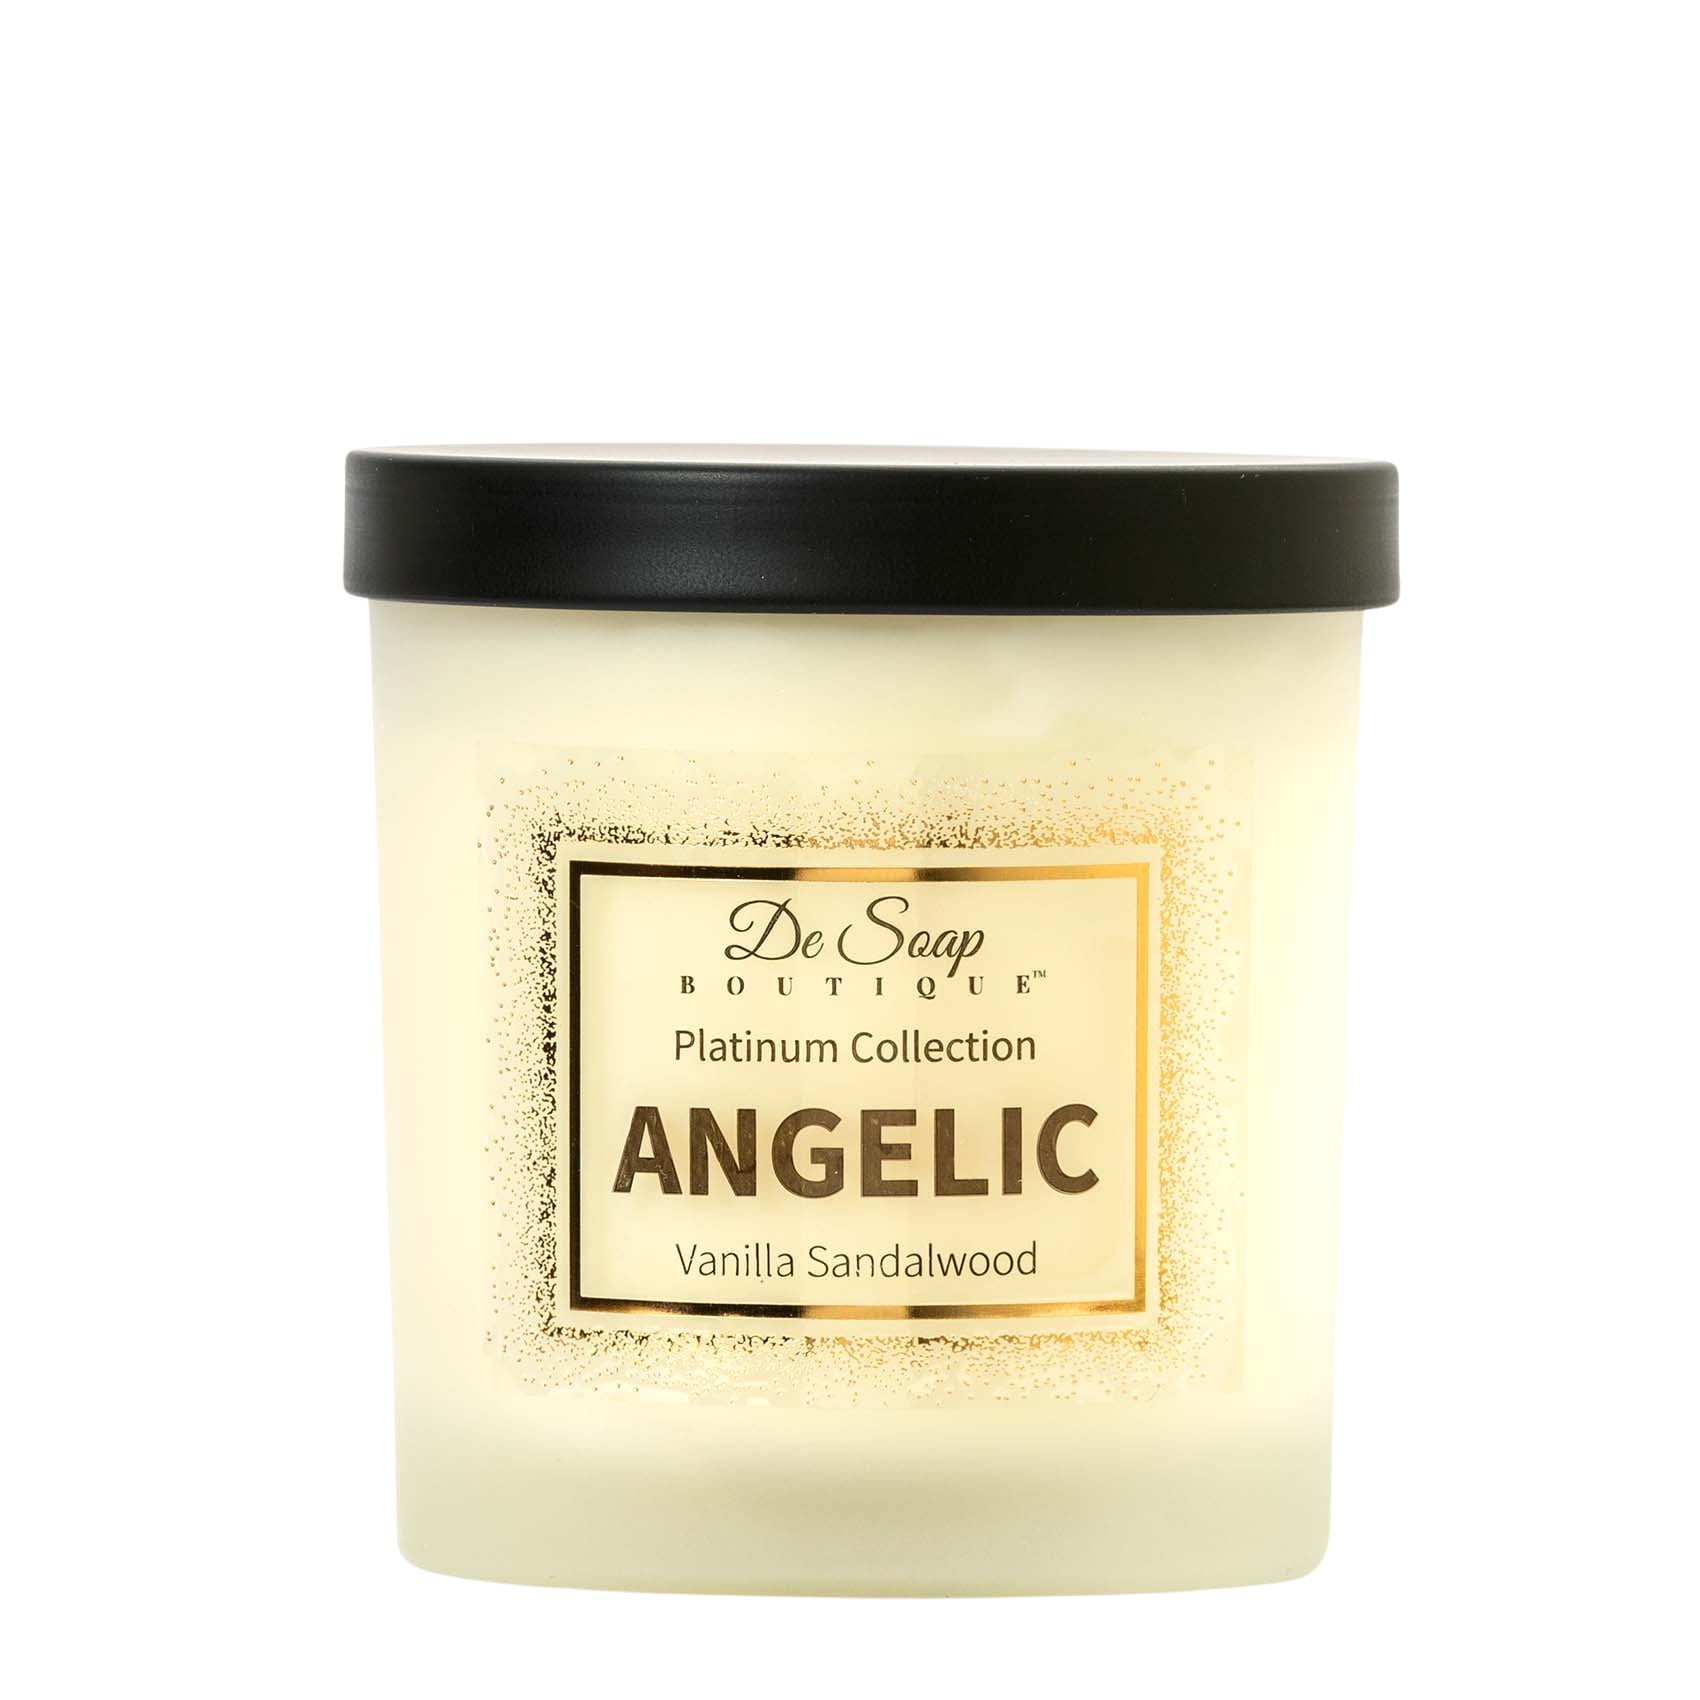 De Soap Boutique ANGELIC Vanilla Sandalwood Candle 10 oz